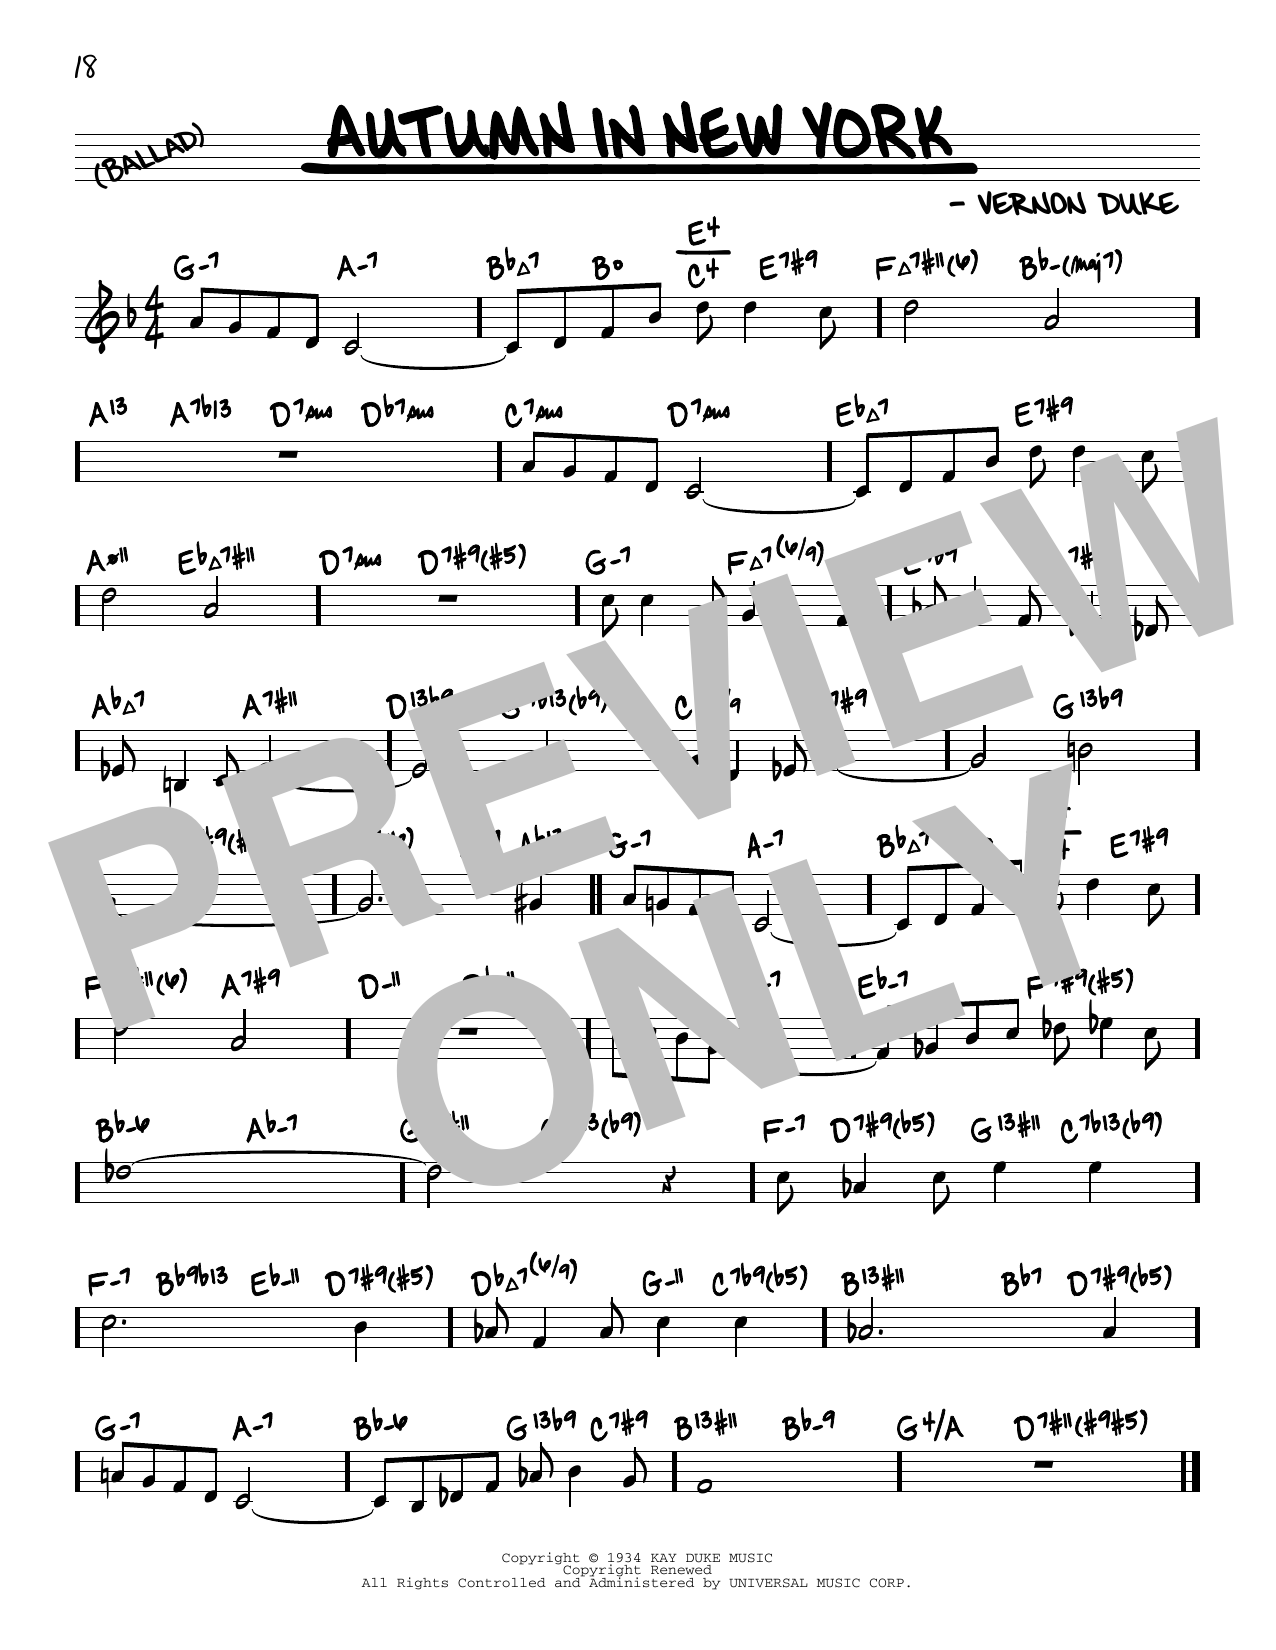 Vernon Duke Autumn In New York (arr. David Hazeltine) Sheet Music Notes & Chords for Real Book – Enhanced Chords - Download or Print PDF